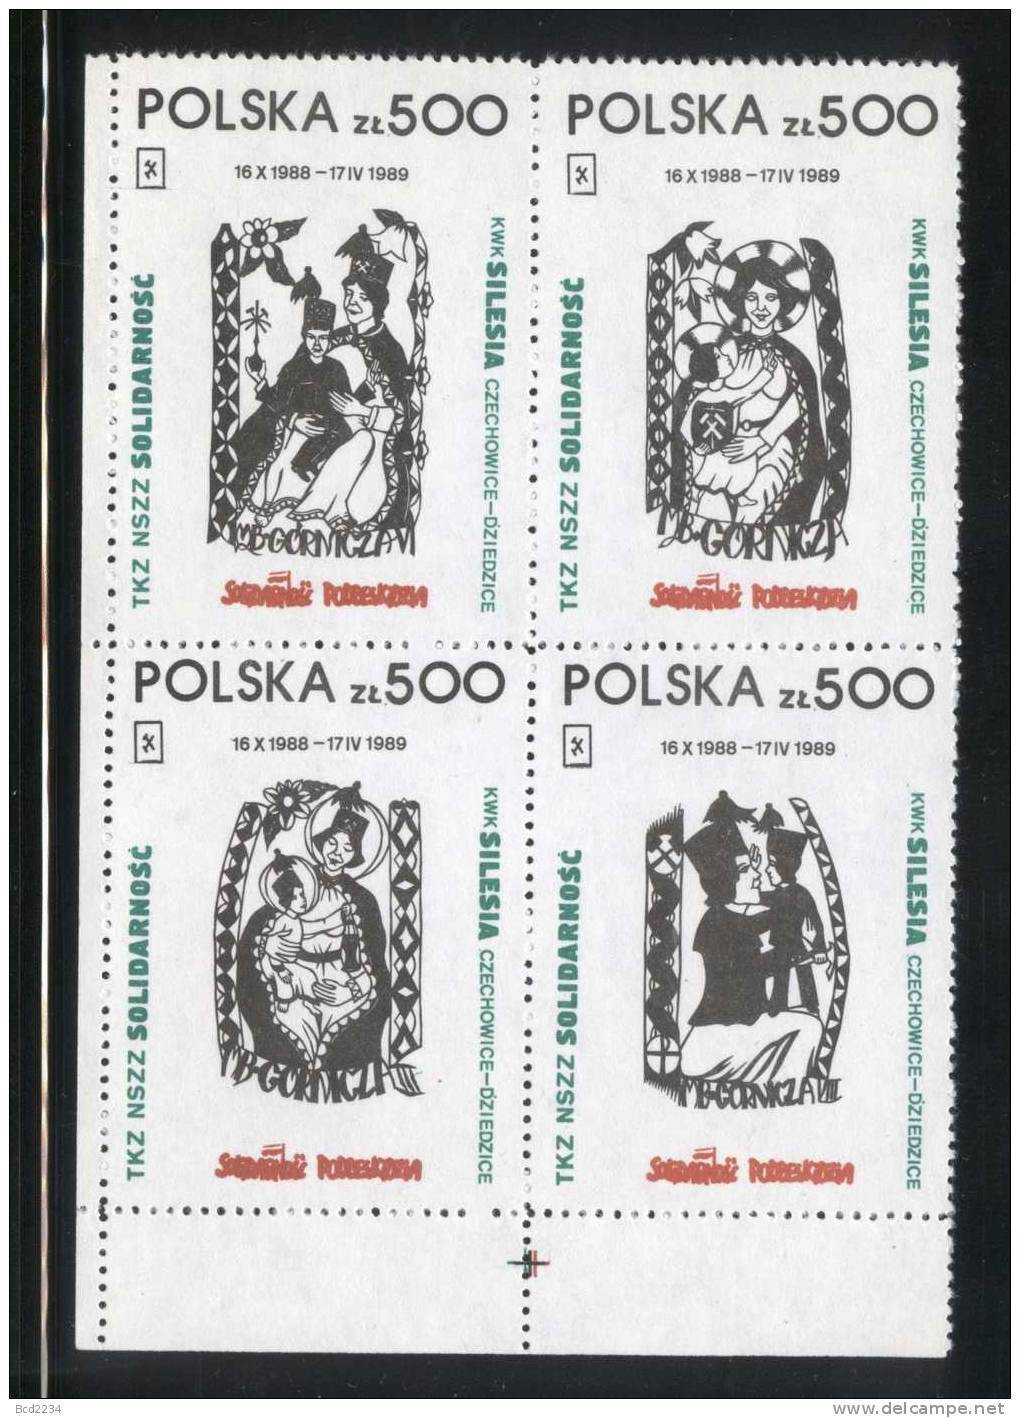 POLAND SOLIDARNOSC (TKZ NSZZ SOLIDARNOSC) 1989 RELIGIOUS SCENES MADONNAS BLOCK OF 4 CANCELLED (SOLID0779/1356) - Solidarnosc Labels